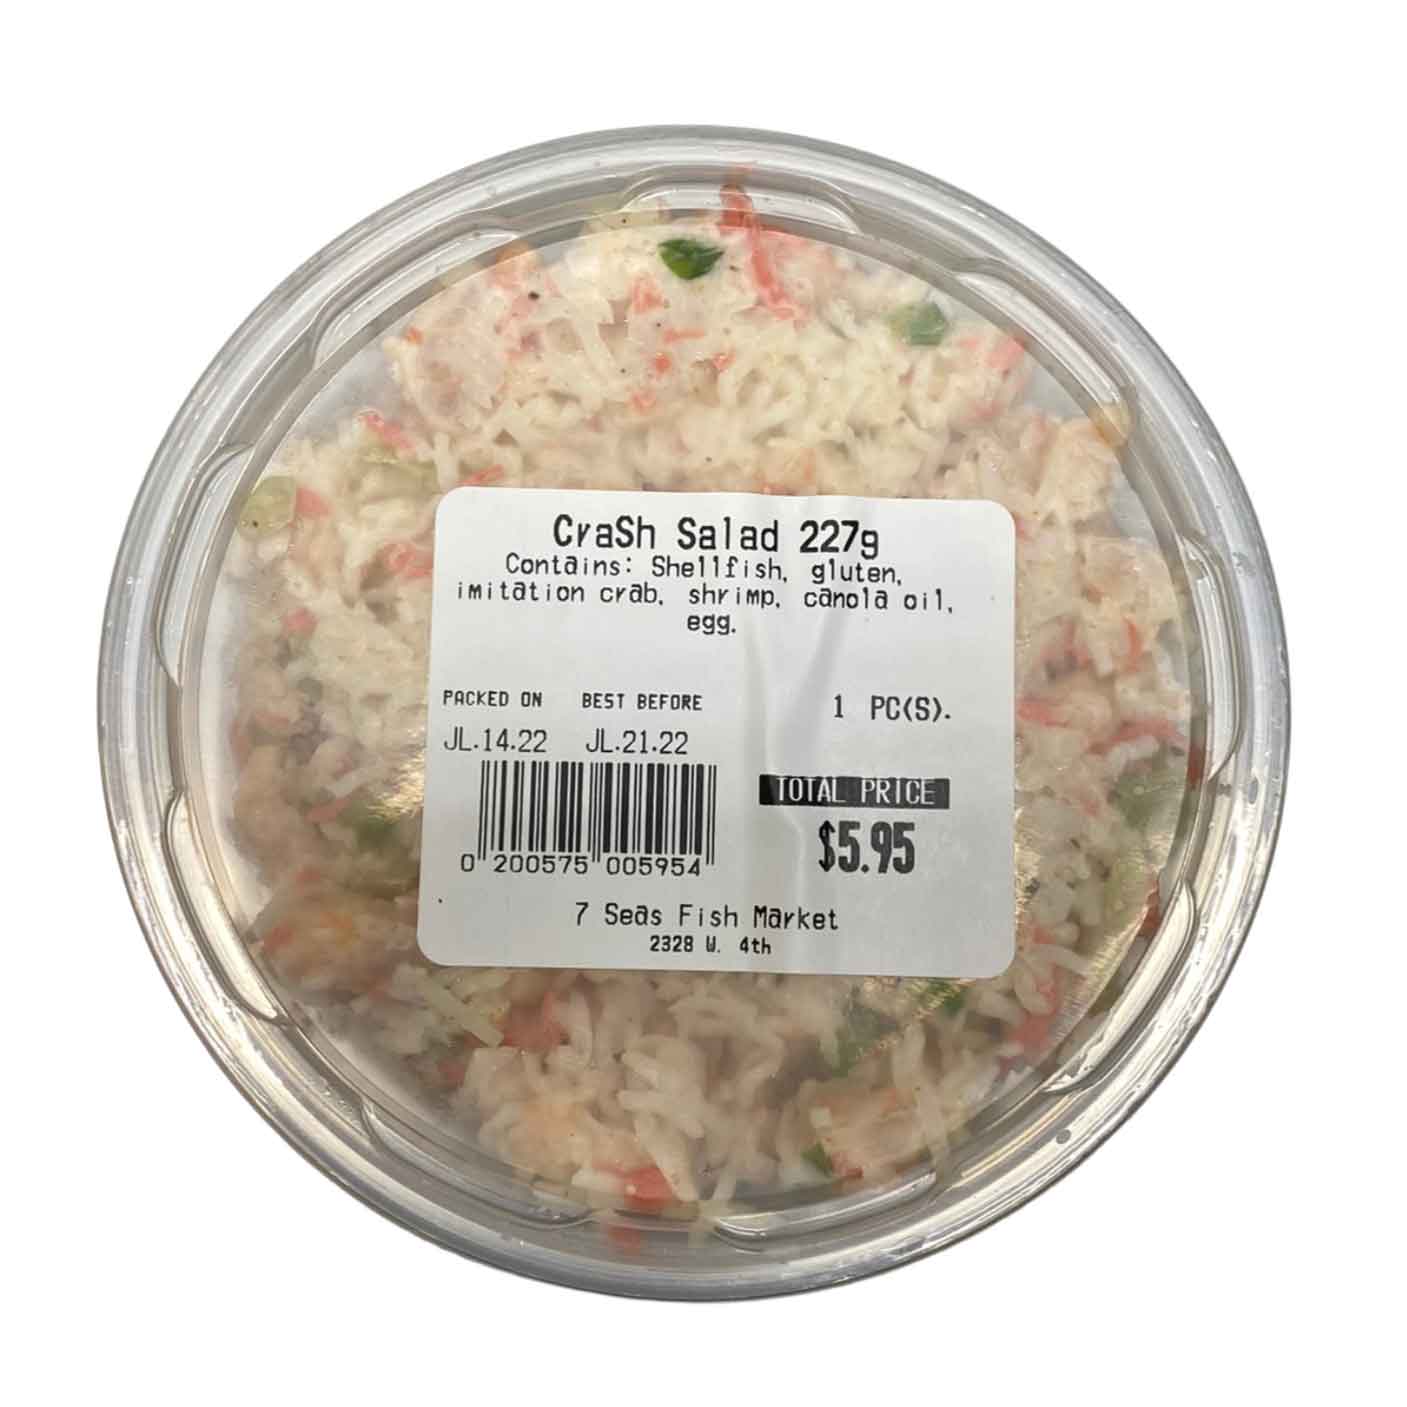 Deli - CraSh Salad 227g (8oz)